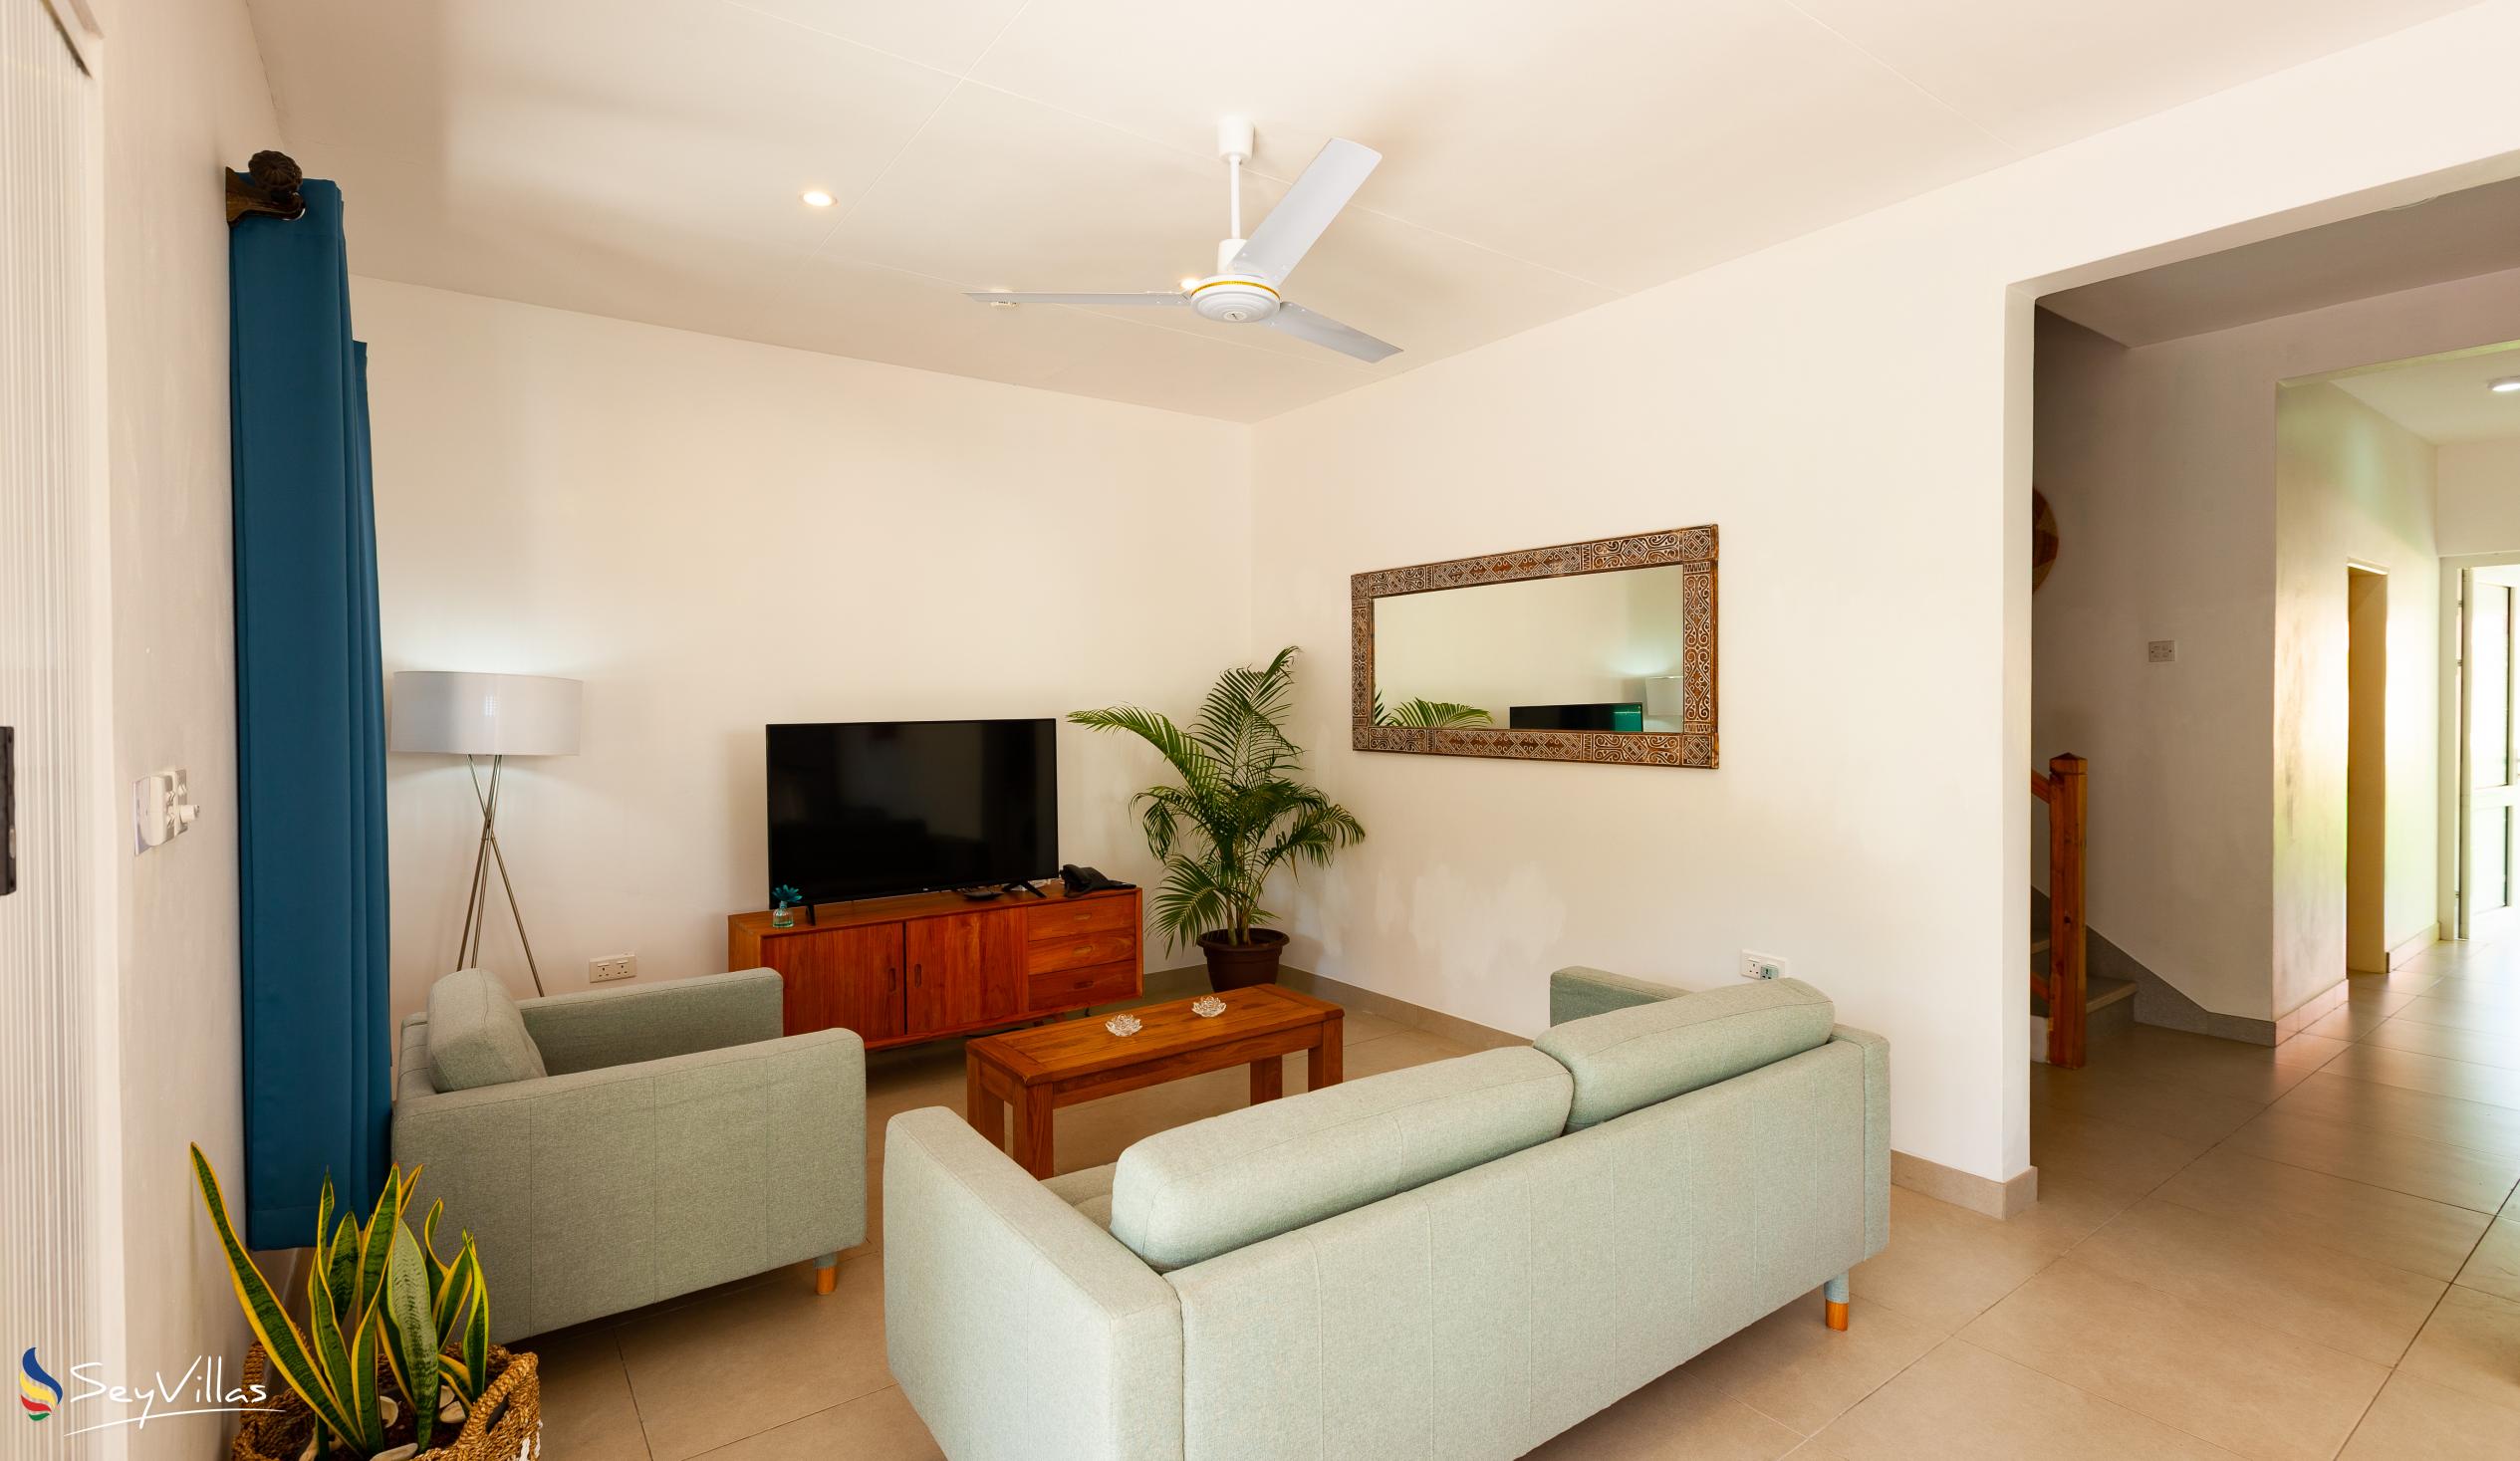 Foto 31: Maison Marie-Jeanne - Appartement 4 chambres - Praslin (Seychelles)